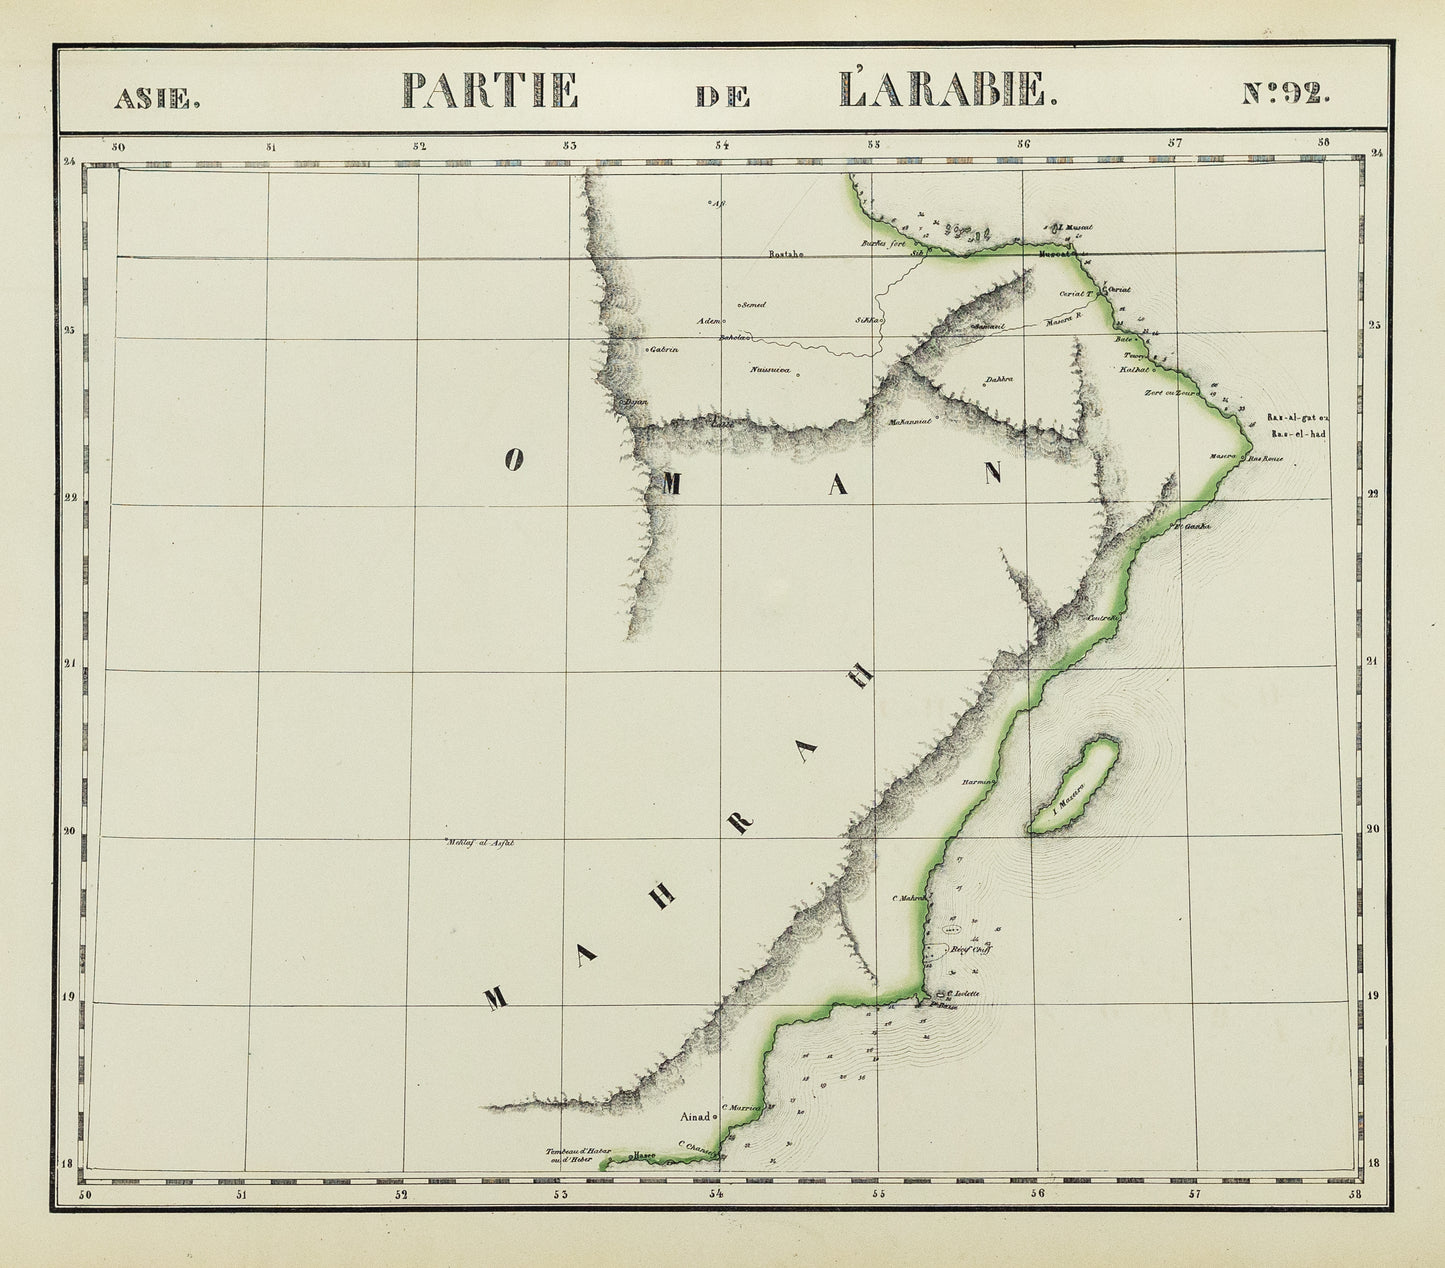 Vandermaelen, Philippe. Partie de L'Arabie. Asie No 92. Brussels: c. 1827